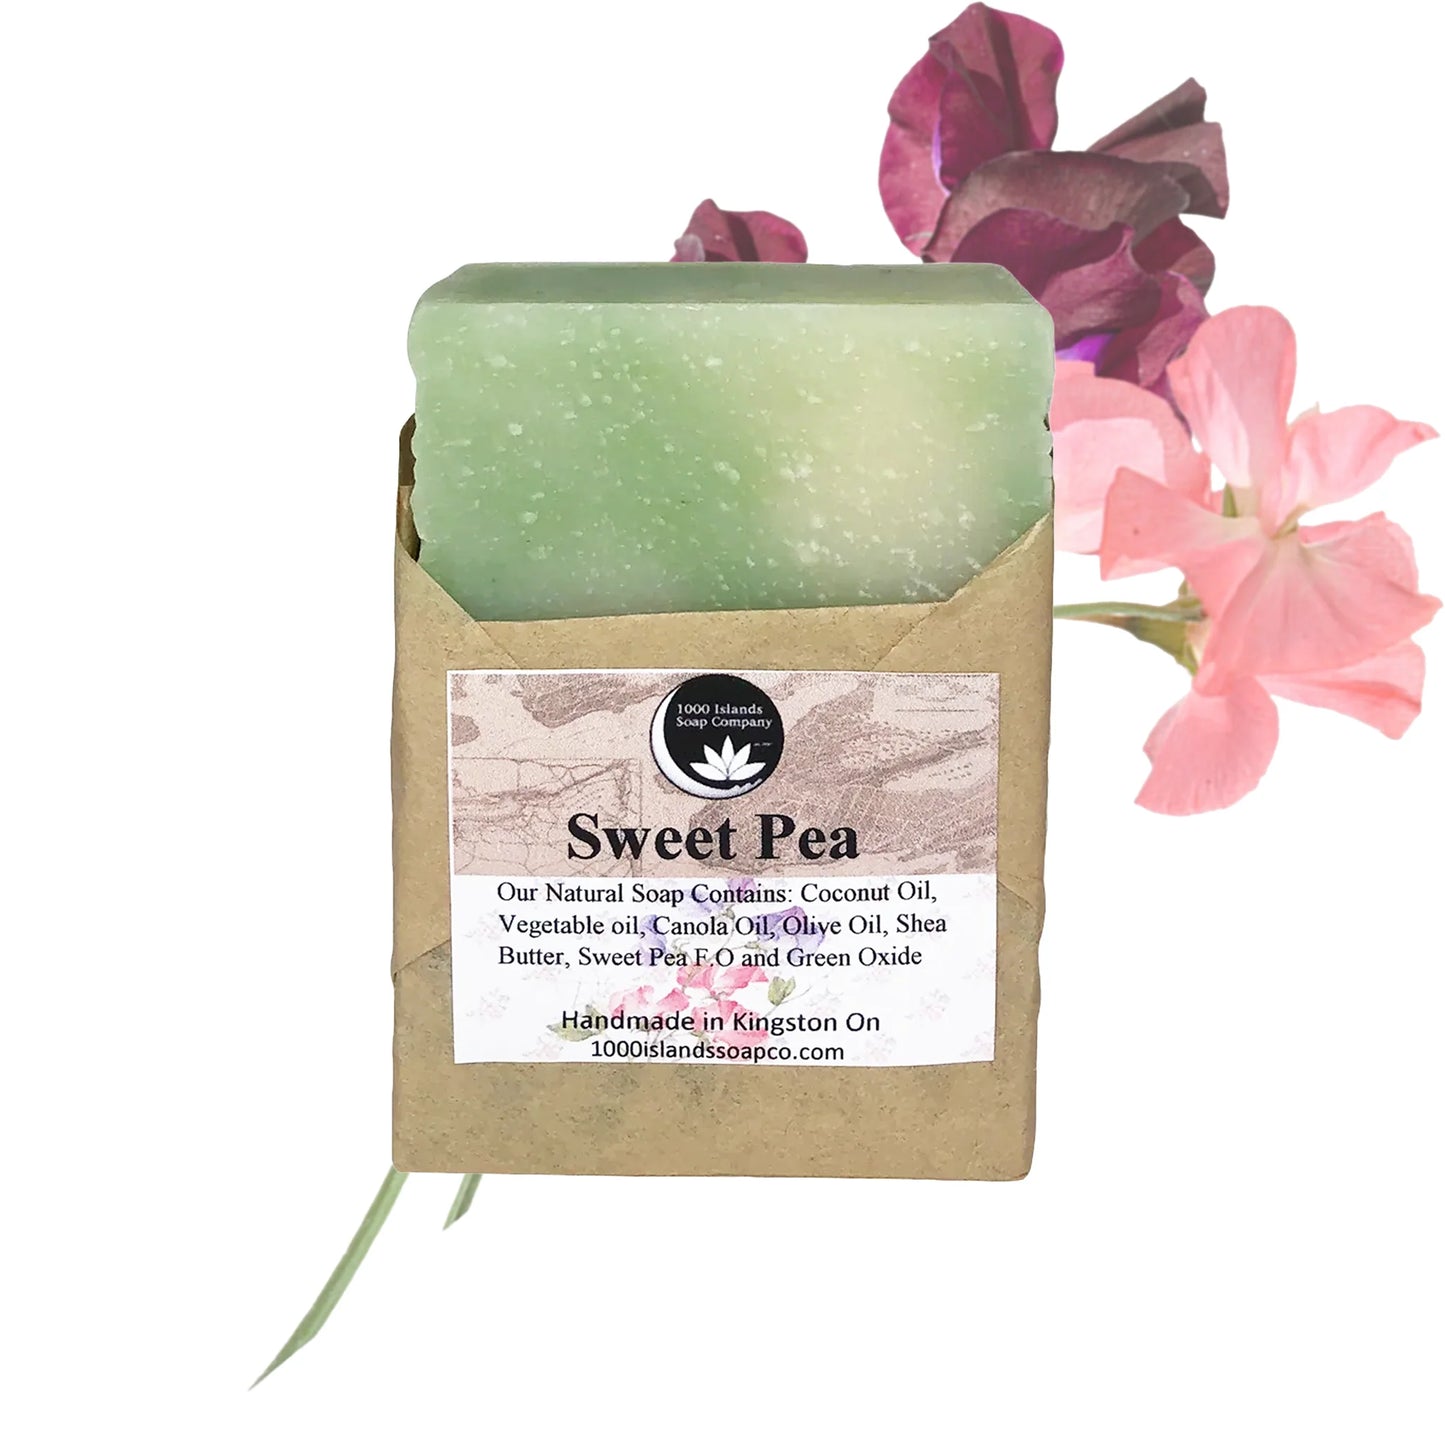 Sweet Pea Natural Soap Bar